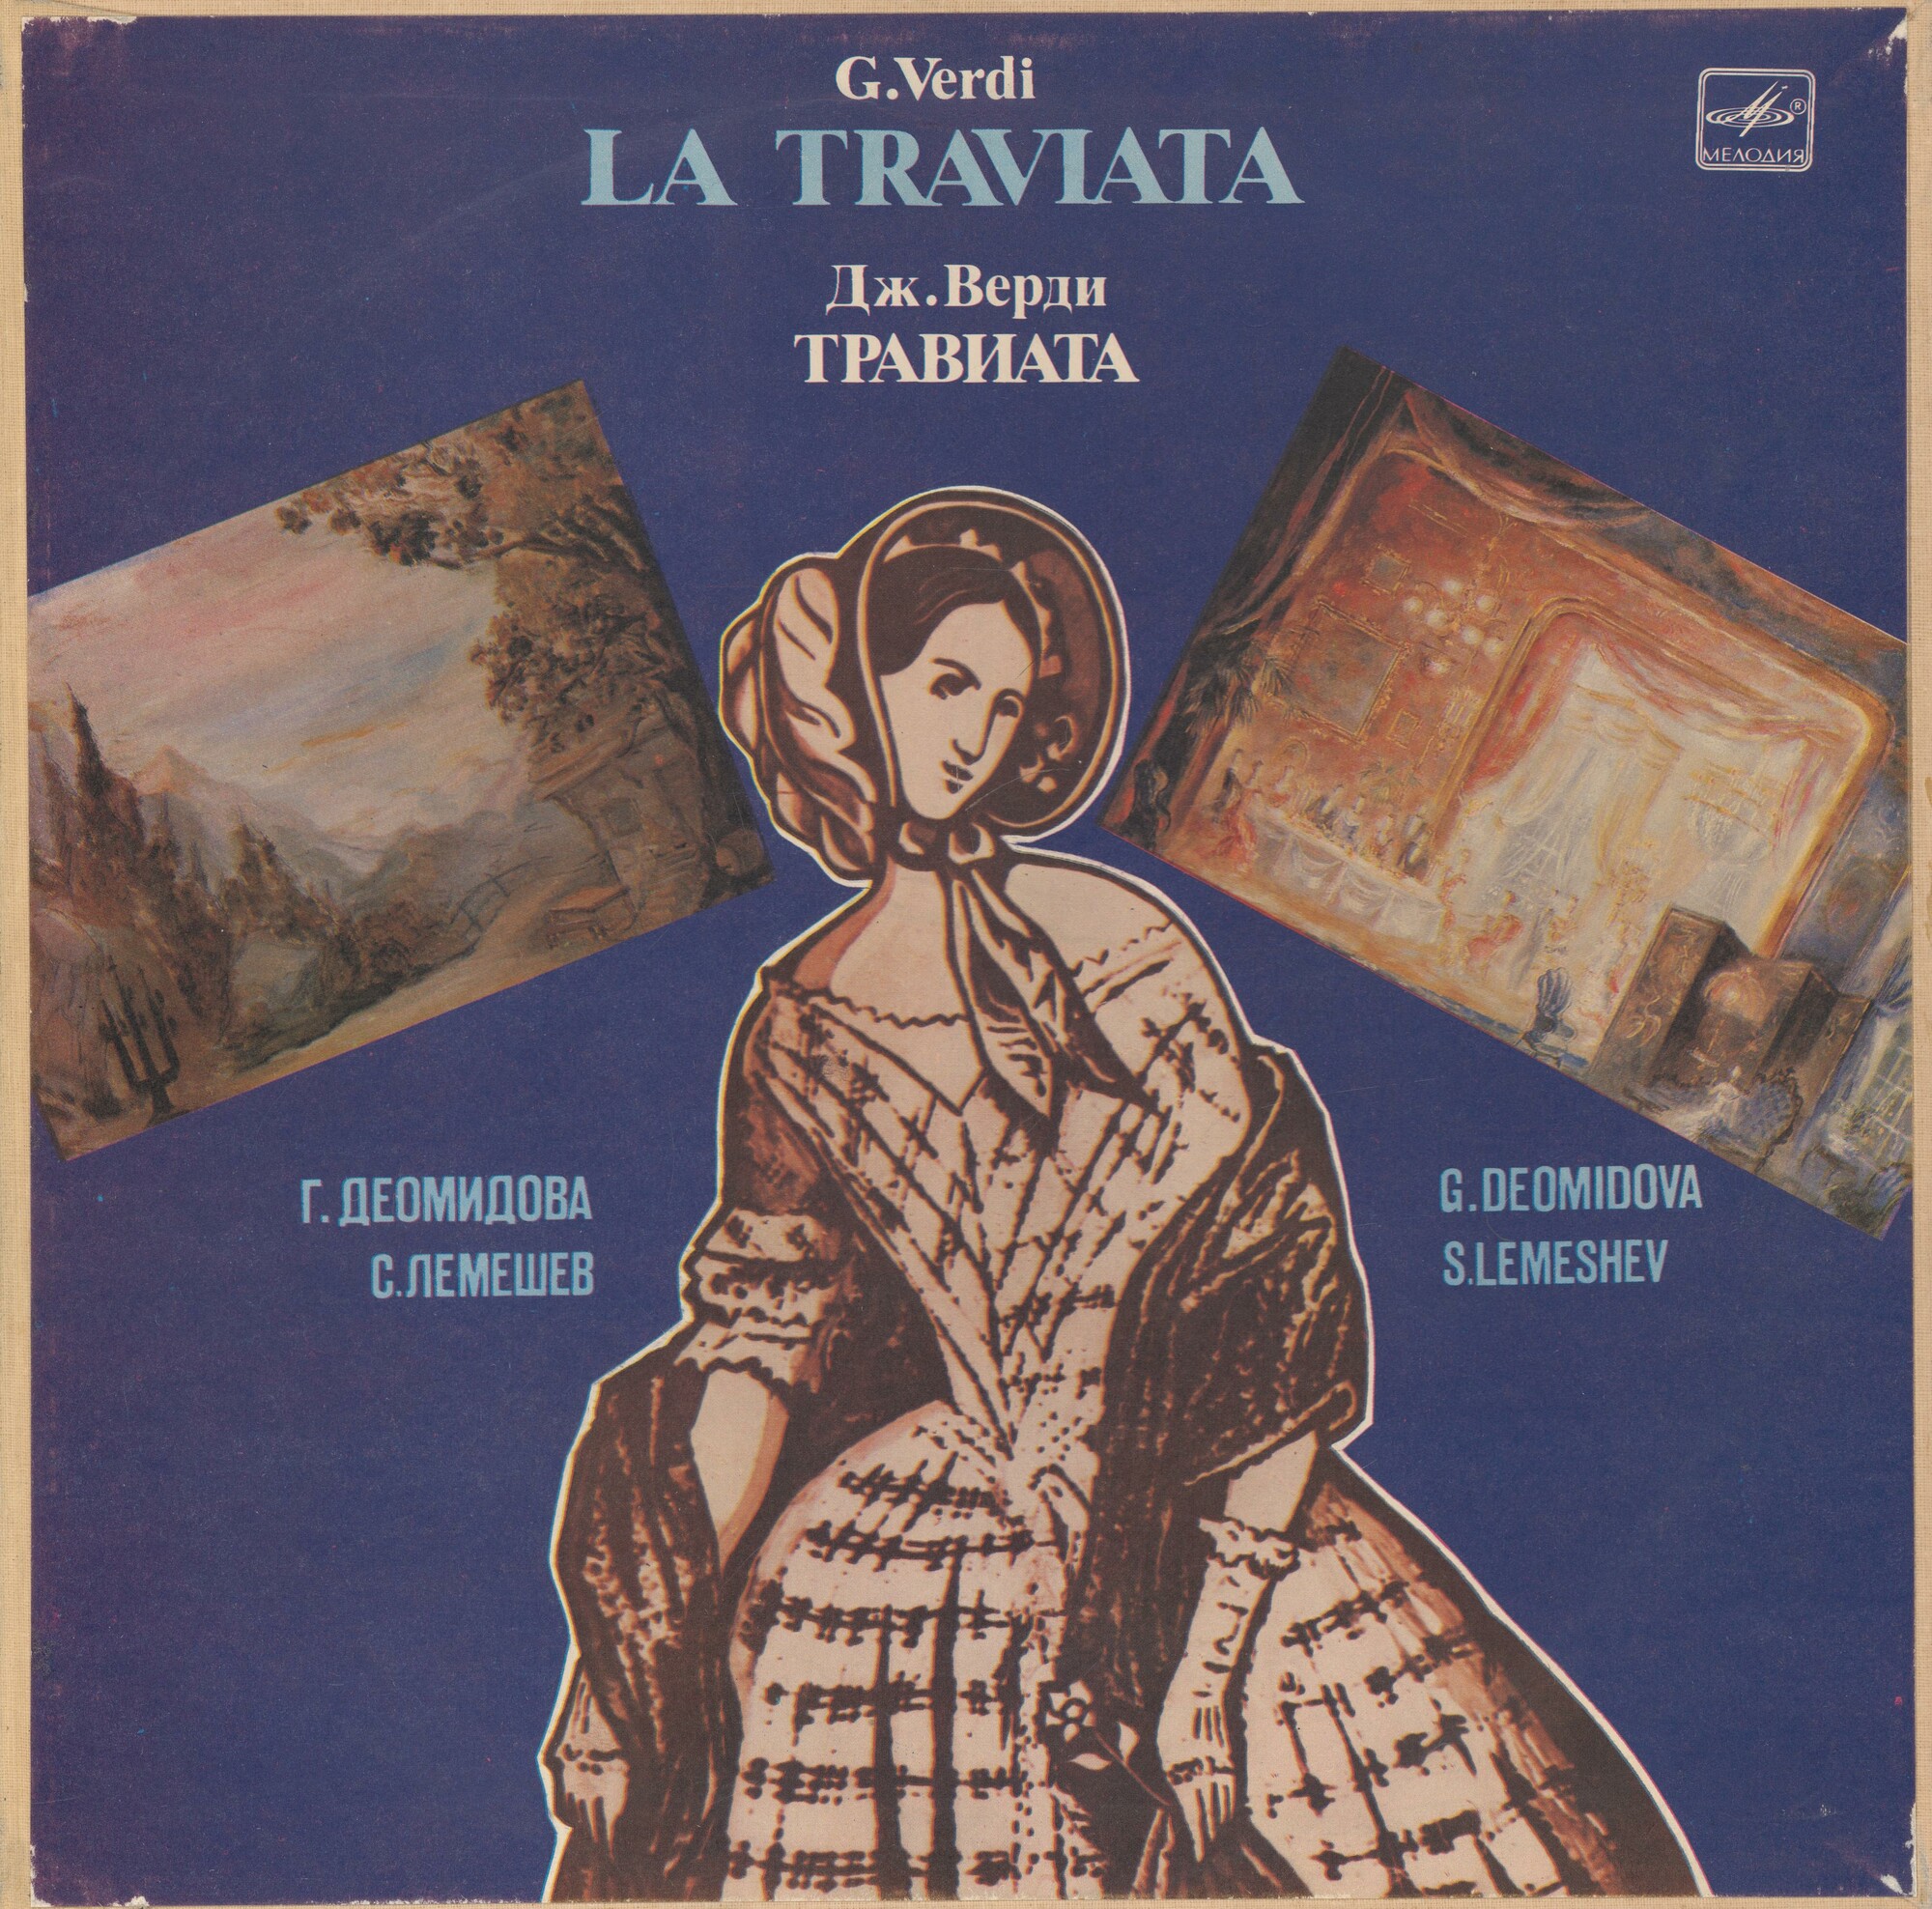 Дж. ВЕРДИ (1813-1901): «Травиата», опера в четырех действиях.